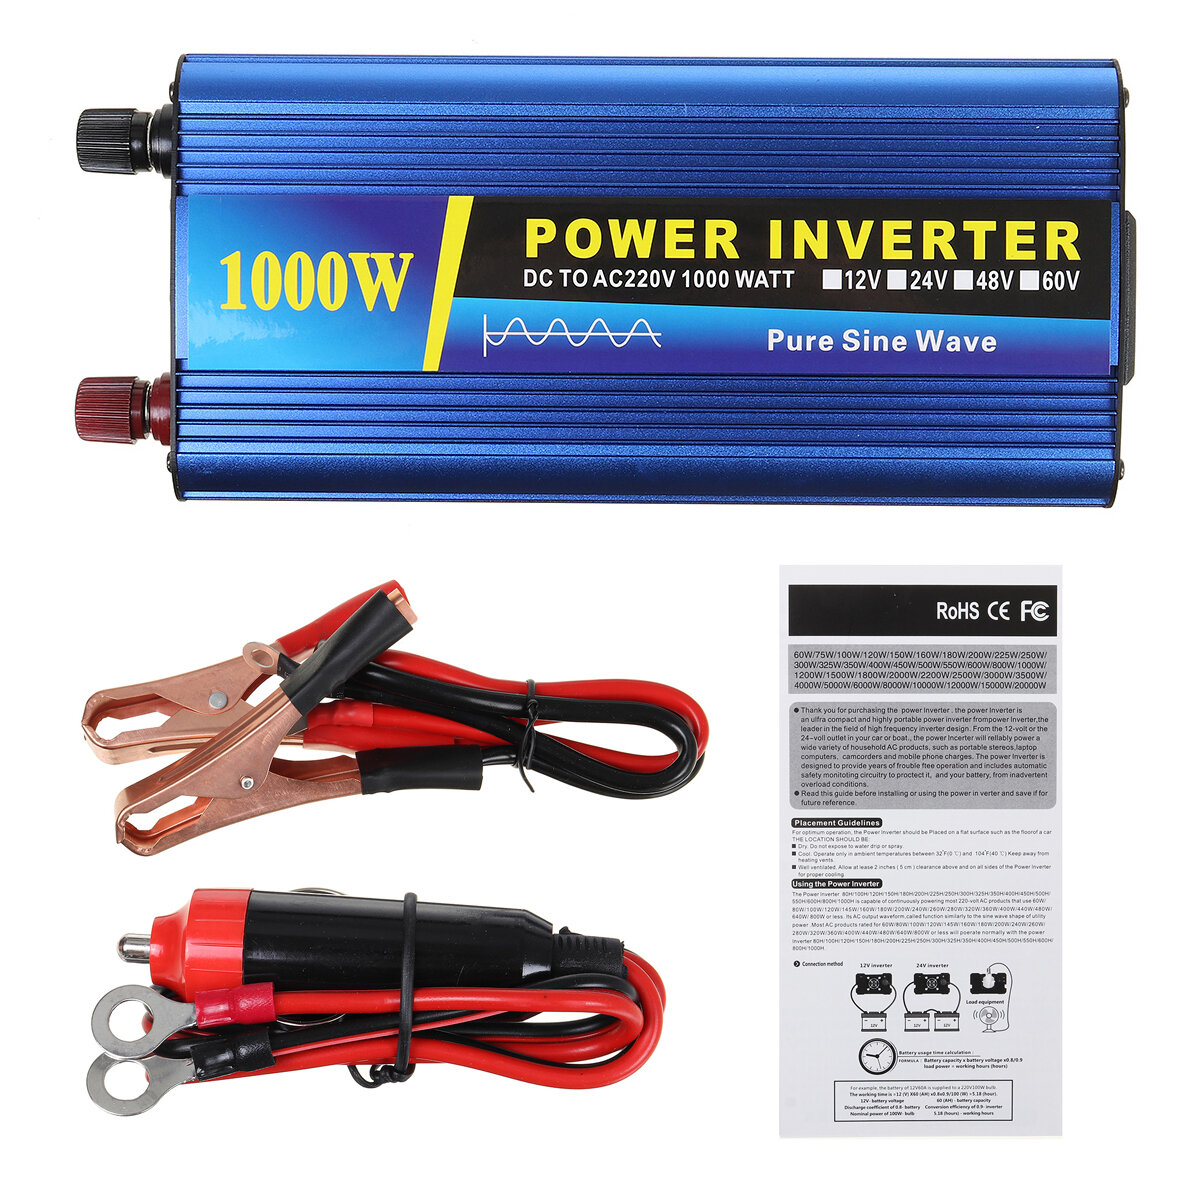 1000W Power Inverter DC 122448V to AC 220V Car Sine Wave Converter